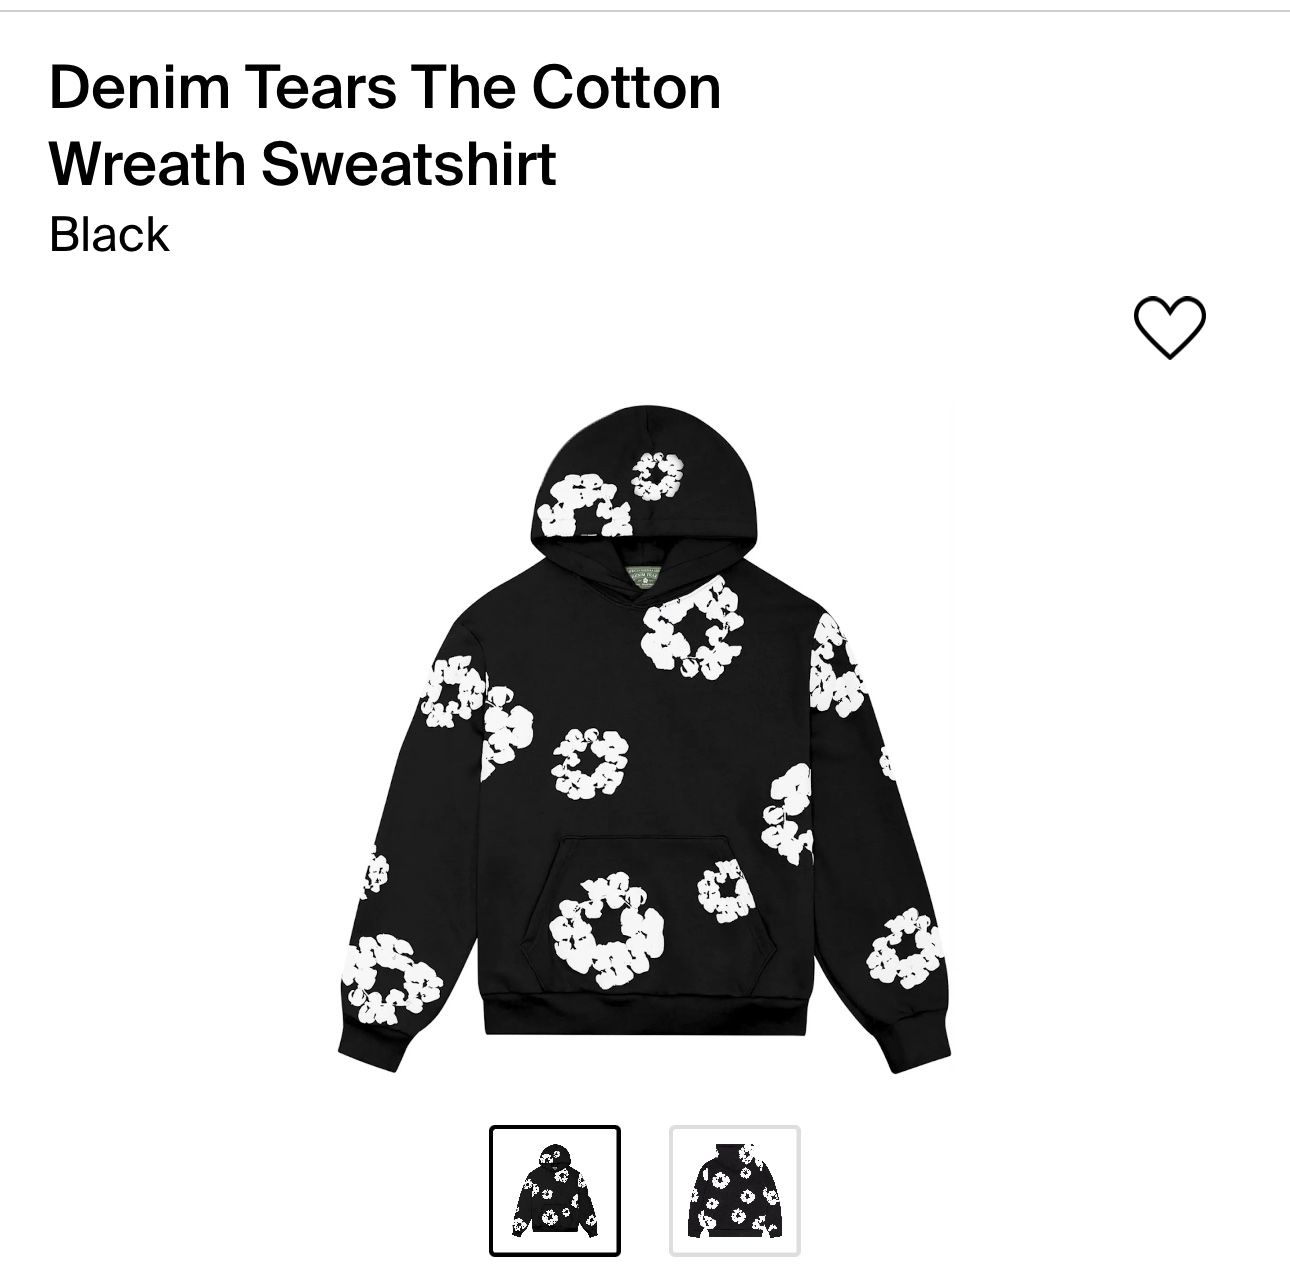 Denim Tears the Cotton Wreath Sweatshirt